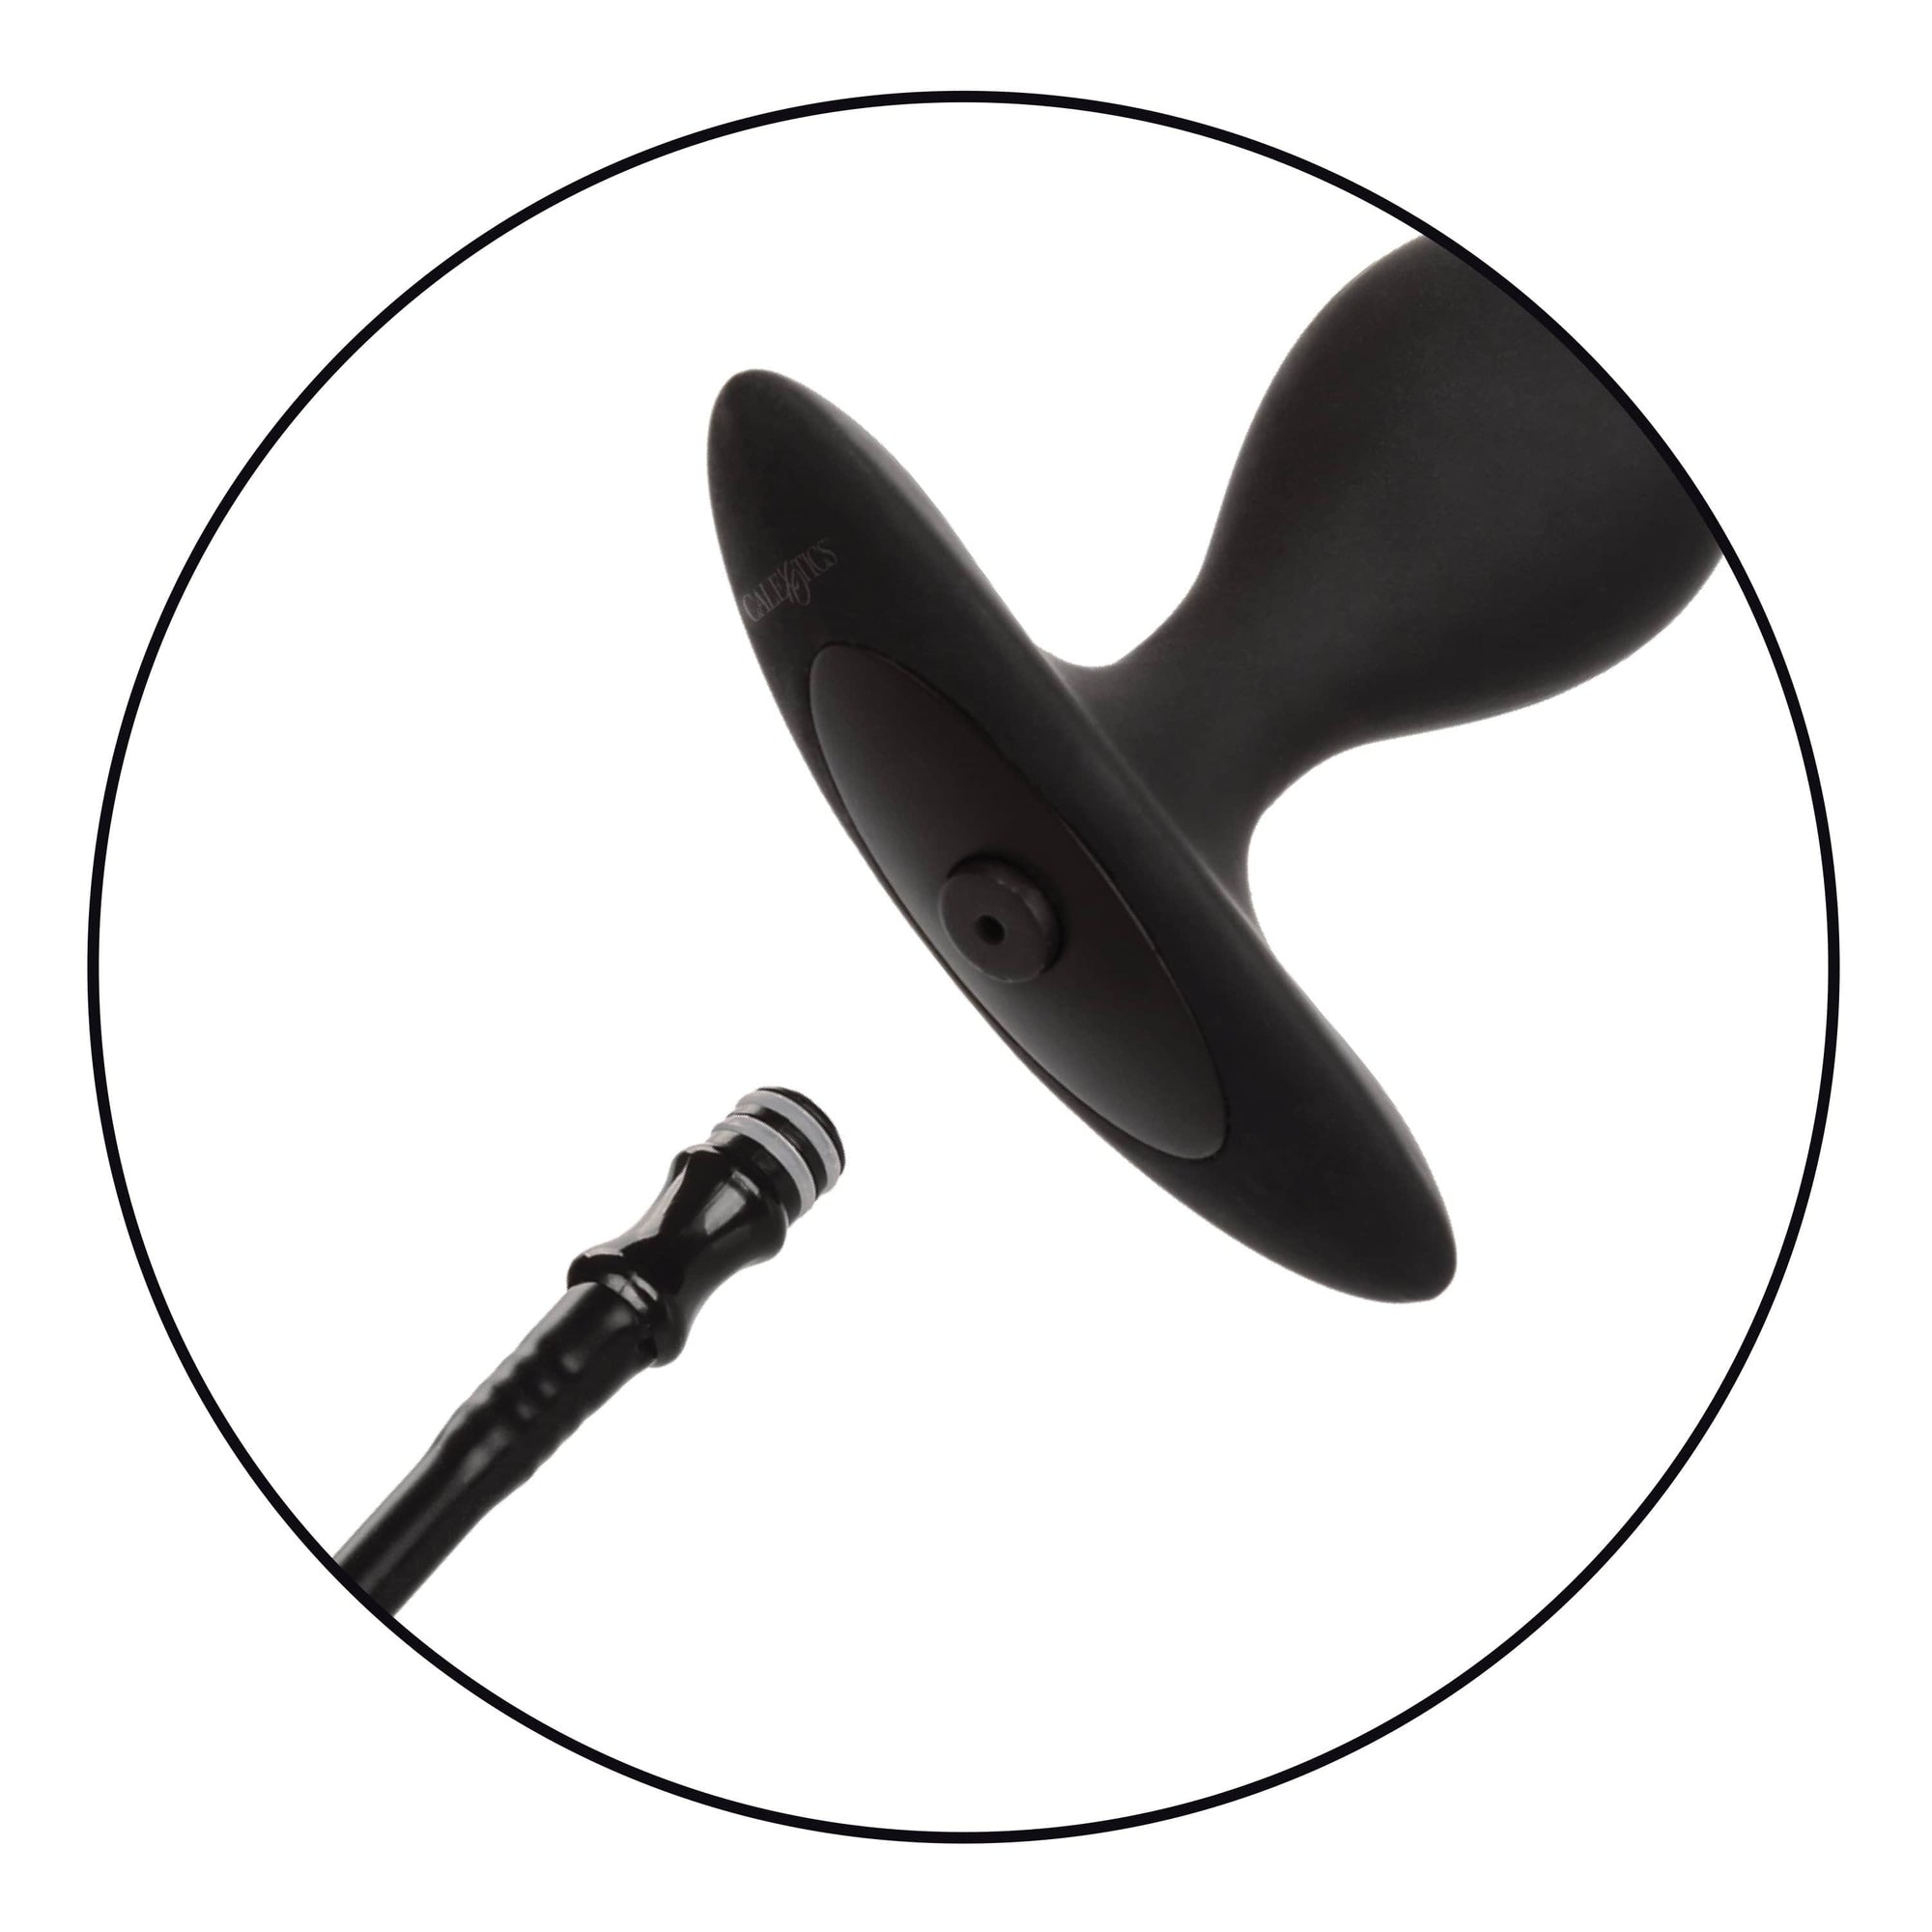 California Exotics - Colt Weighted Inflatable Pumper Plug (Black) -  Expandable Anal Plug (Non Vibration)  Durio.sg